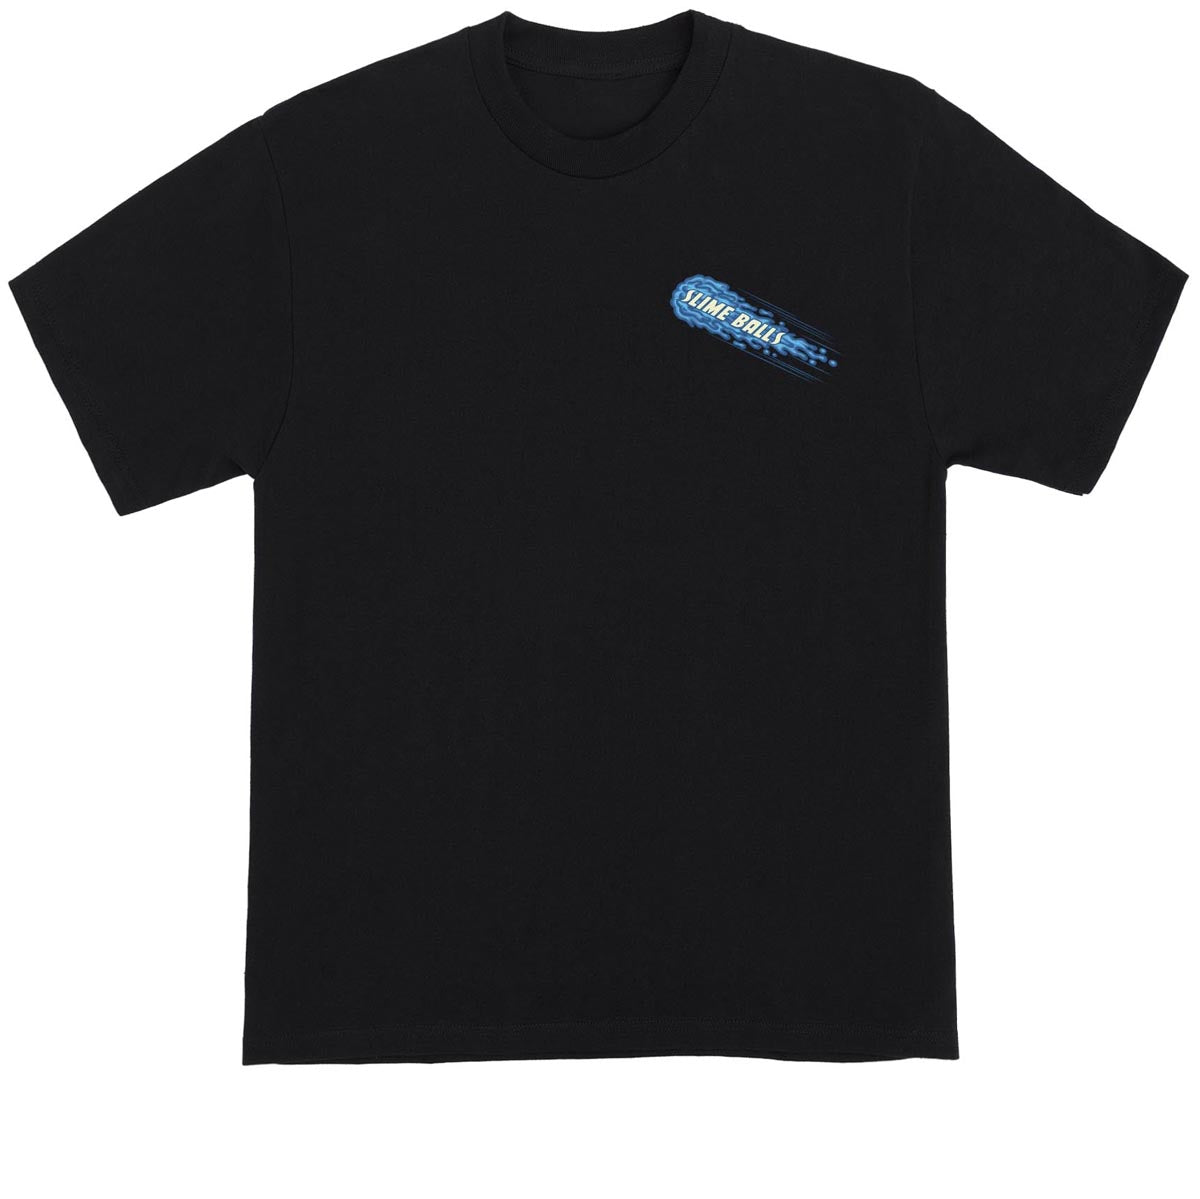 Slime Balls OG T-Shirt - Black image 1